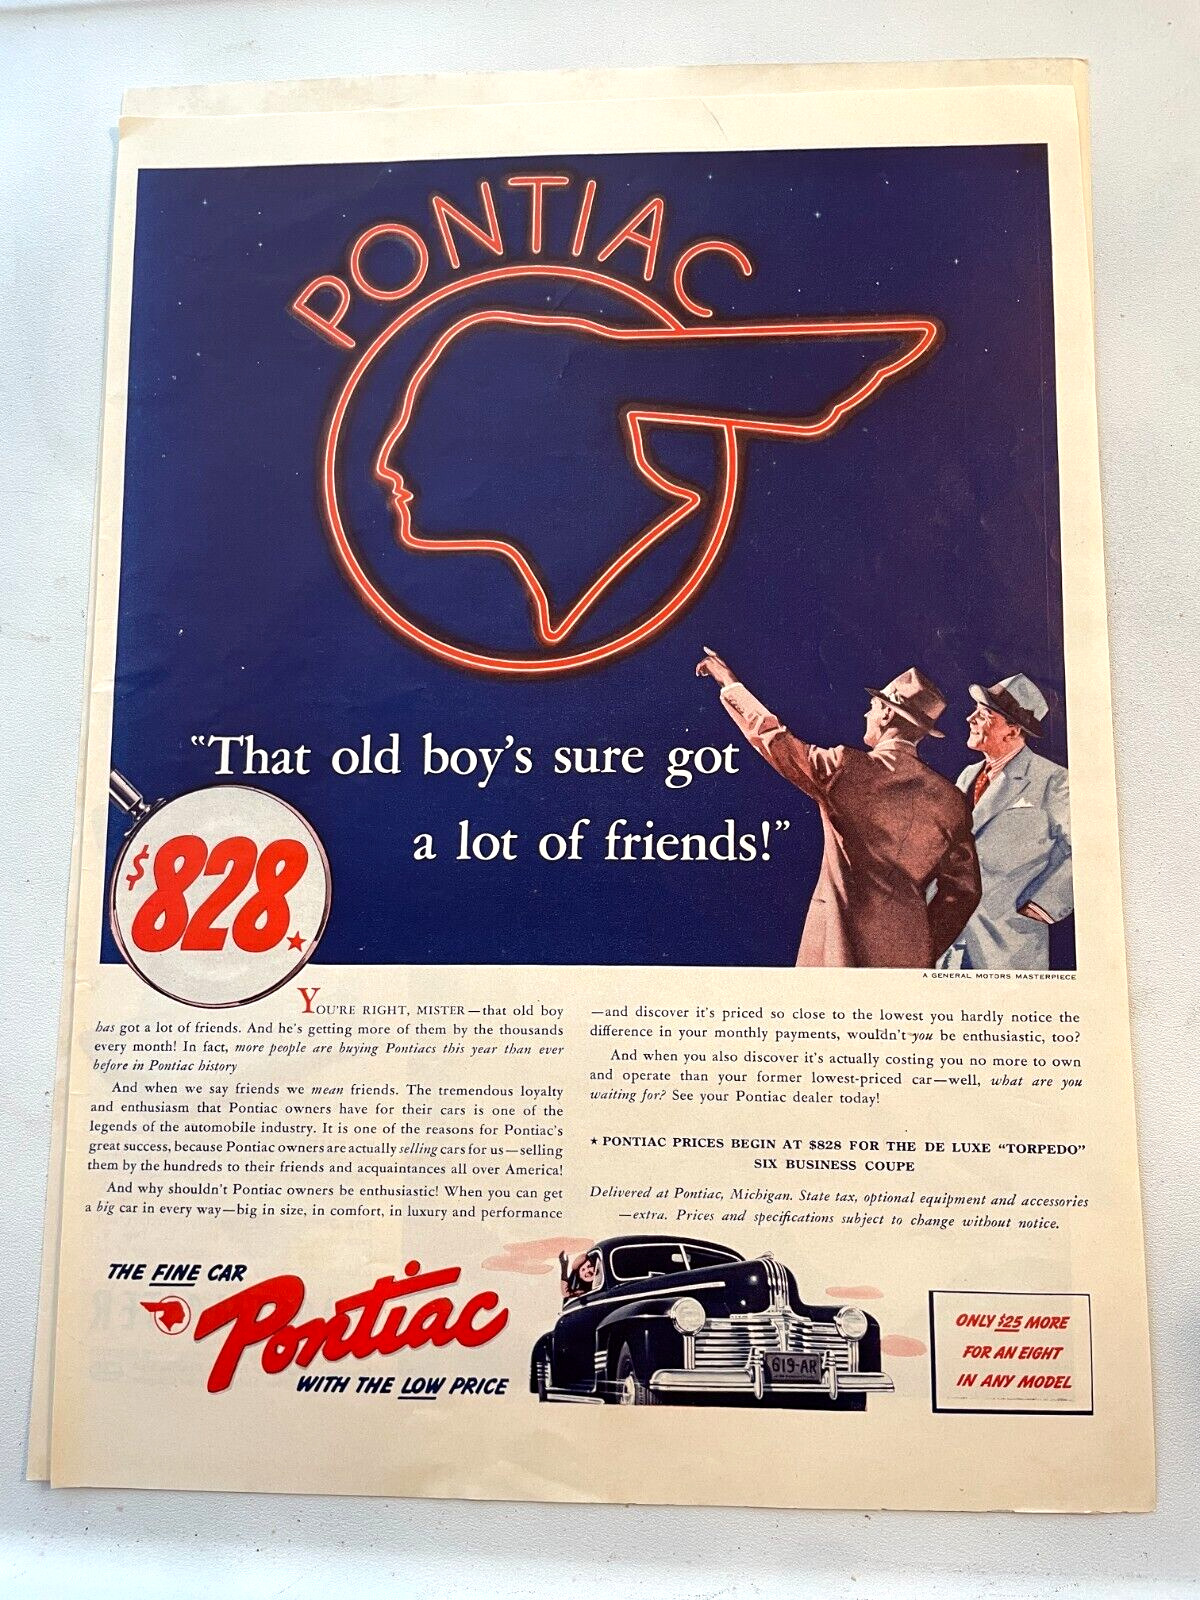 1941 Print Ad Pontiac Neon Sign, Automobile, Men in Hats, Low Price $828 10x13.5